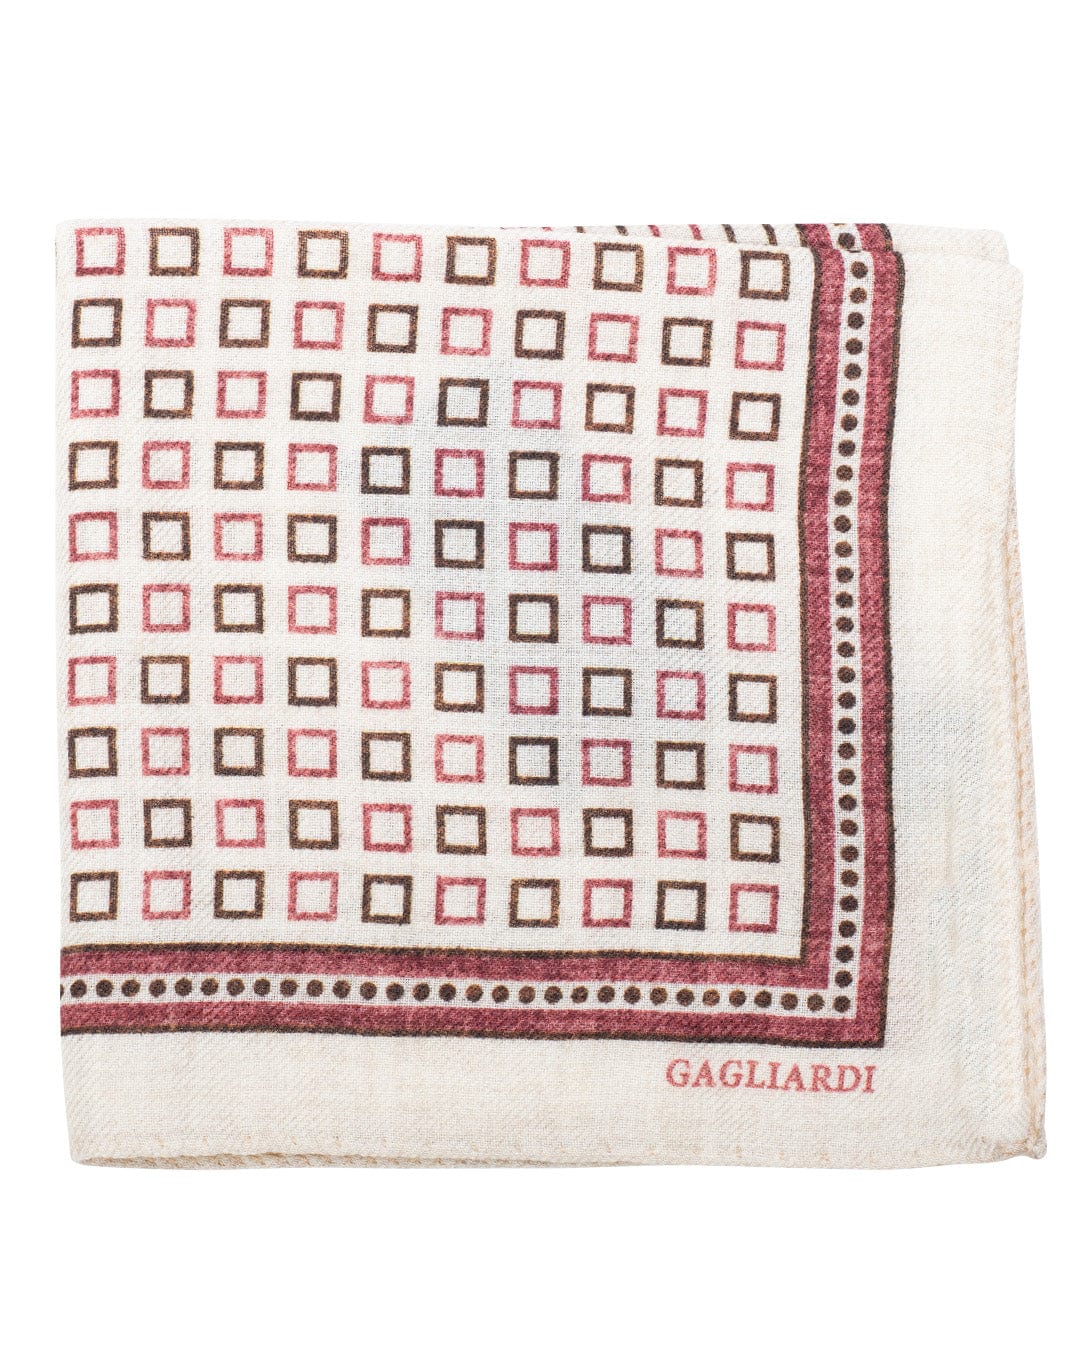 Gagliardi Pocket Squares ONE Gagliardi Pink Squares Print Italian Wool Flannel Pocket Square